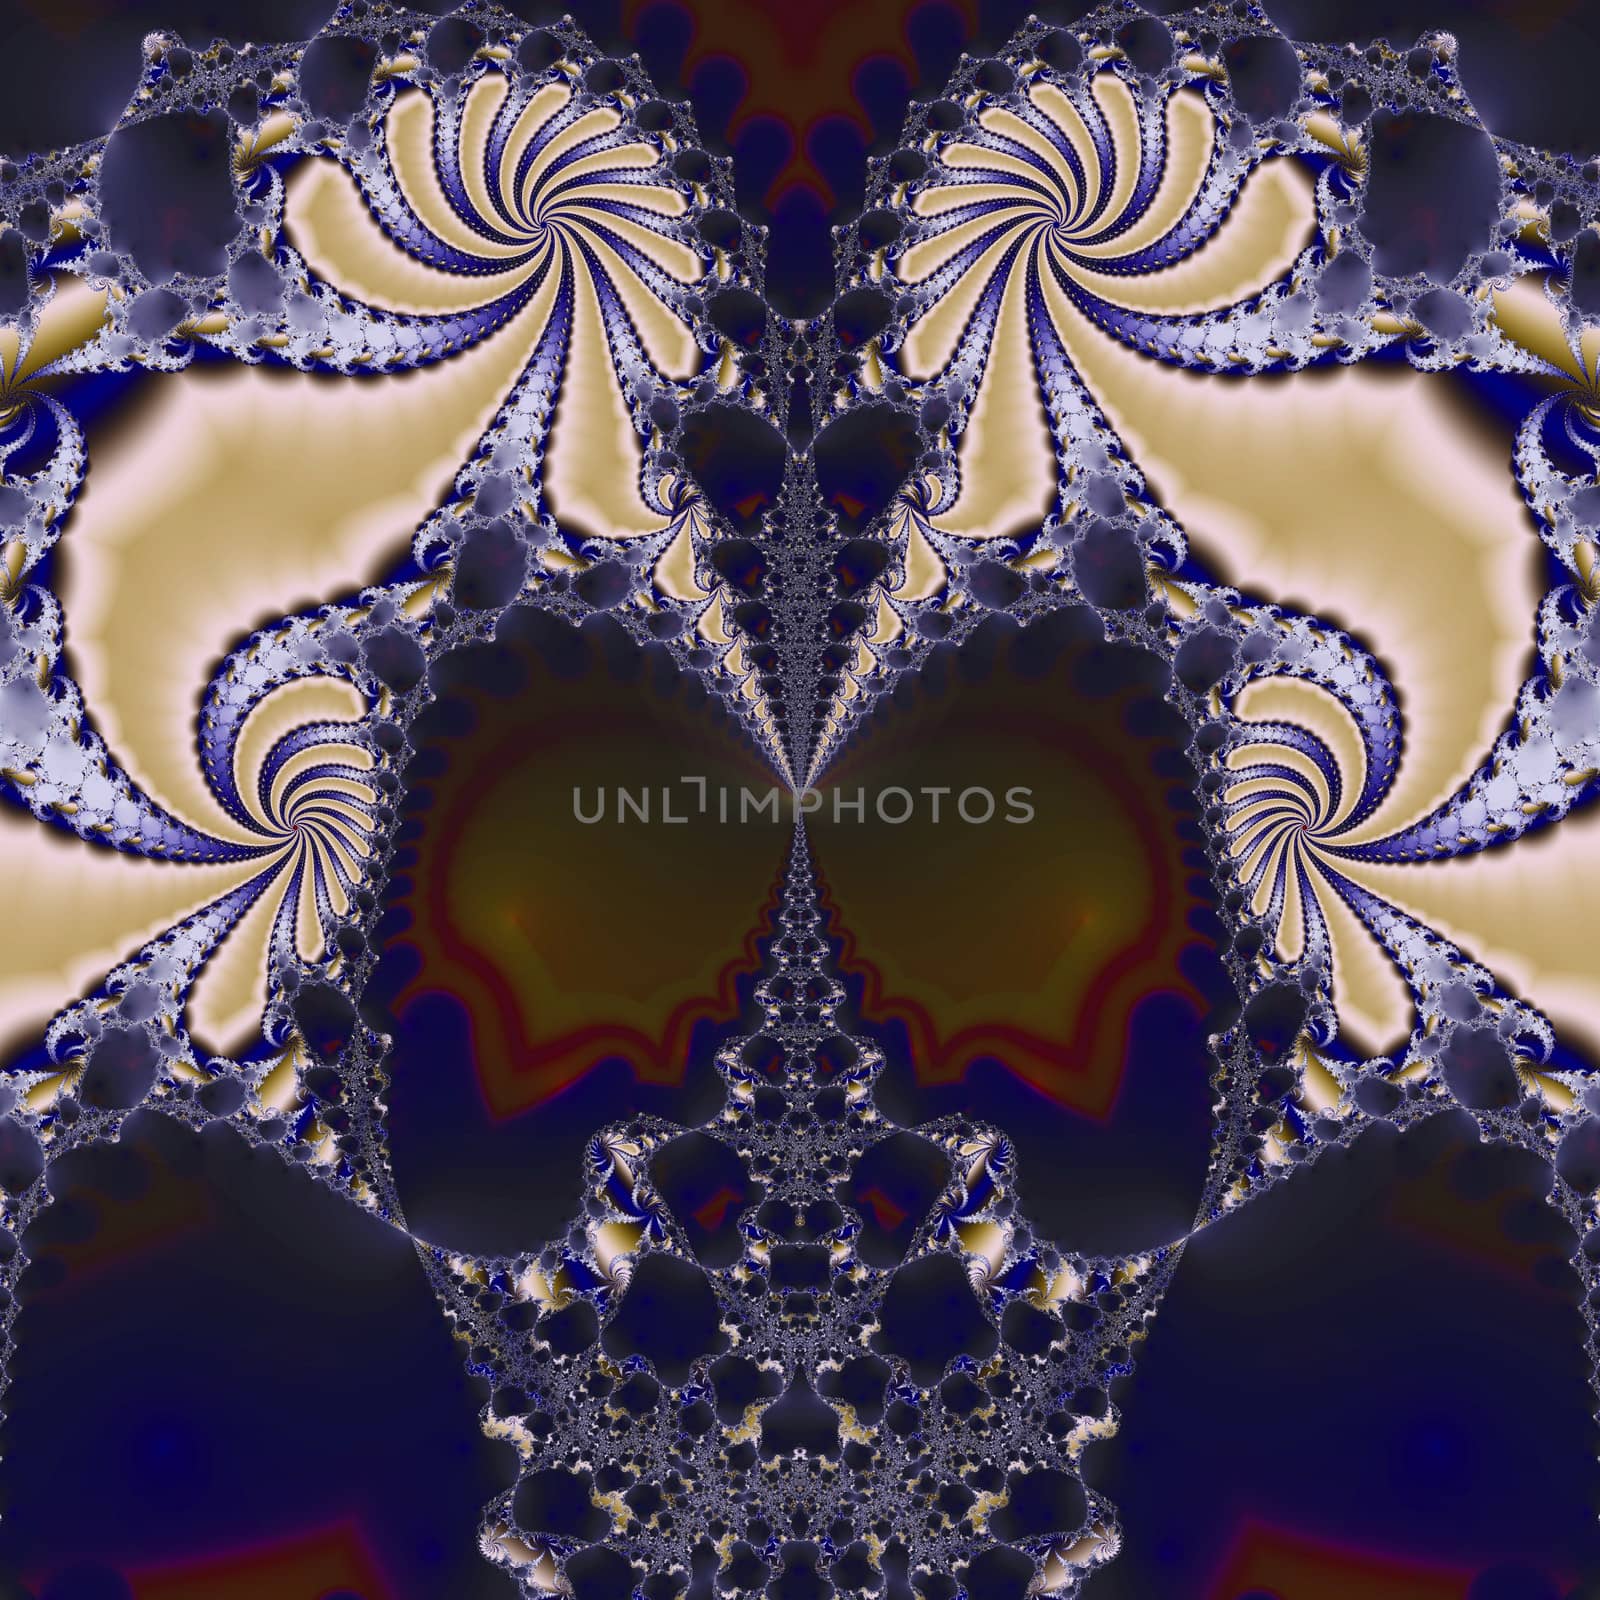 Digital fractal art